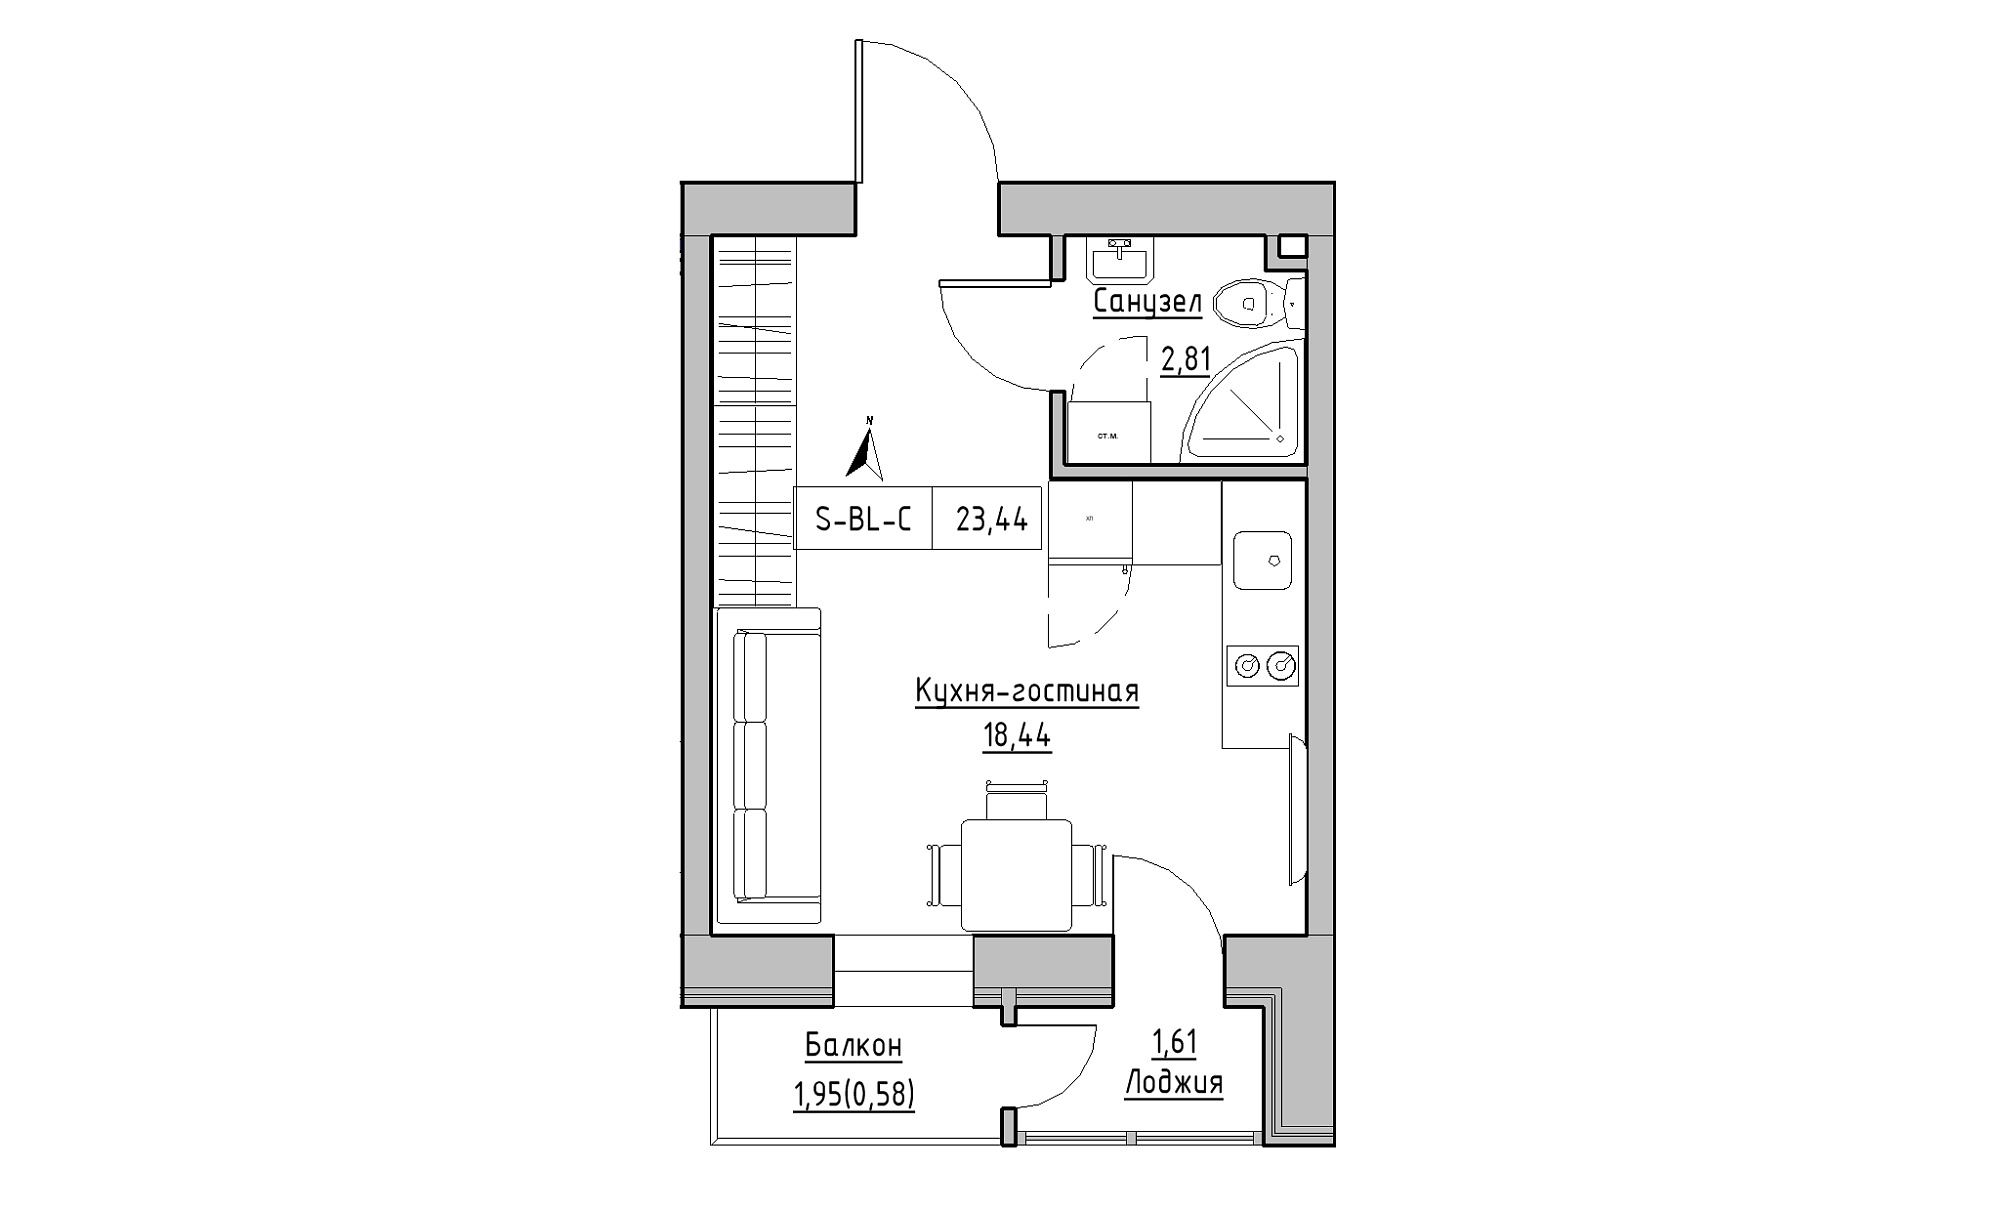 Planning Smart flats area 23.44m2, KS-023-03/0013.